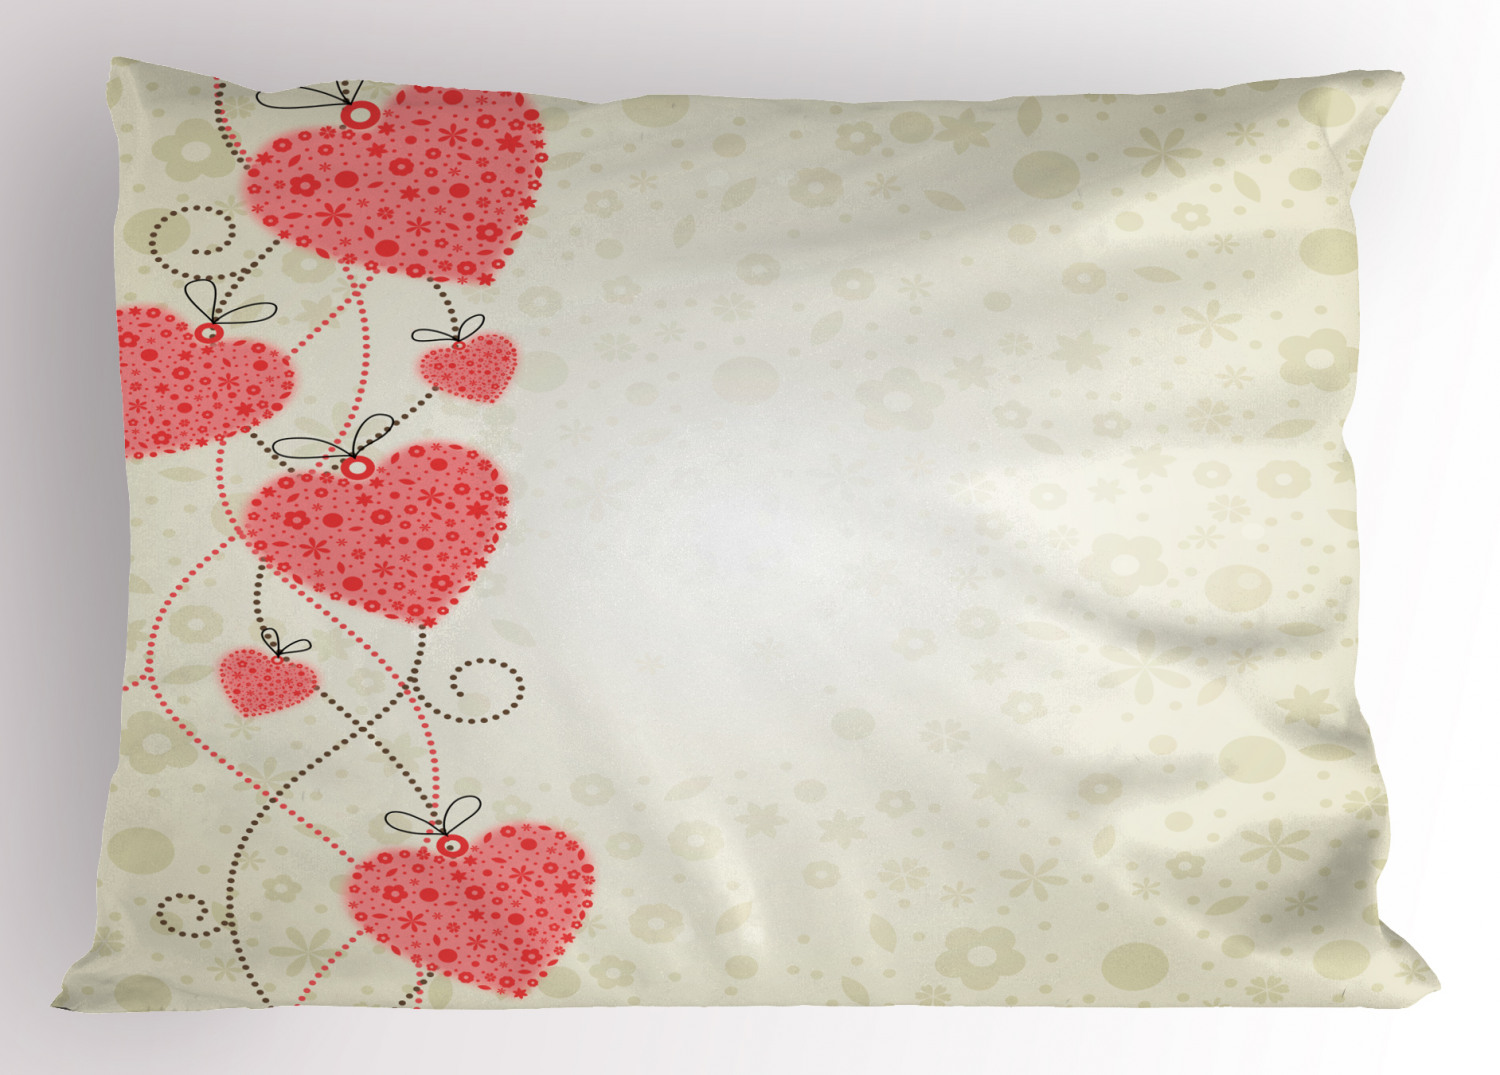 Details about   Romantic Rose Pillow Sham Decorative Pillowcase 3 Sizes Bedroom Decor Ambesonne 